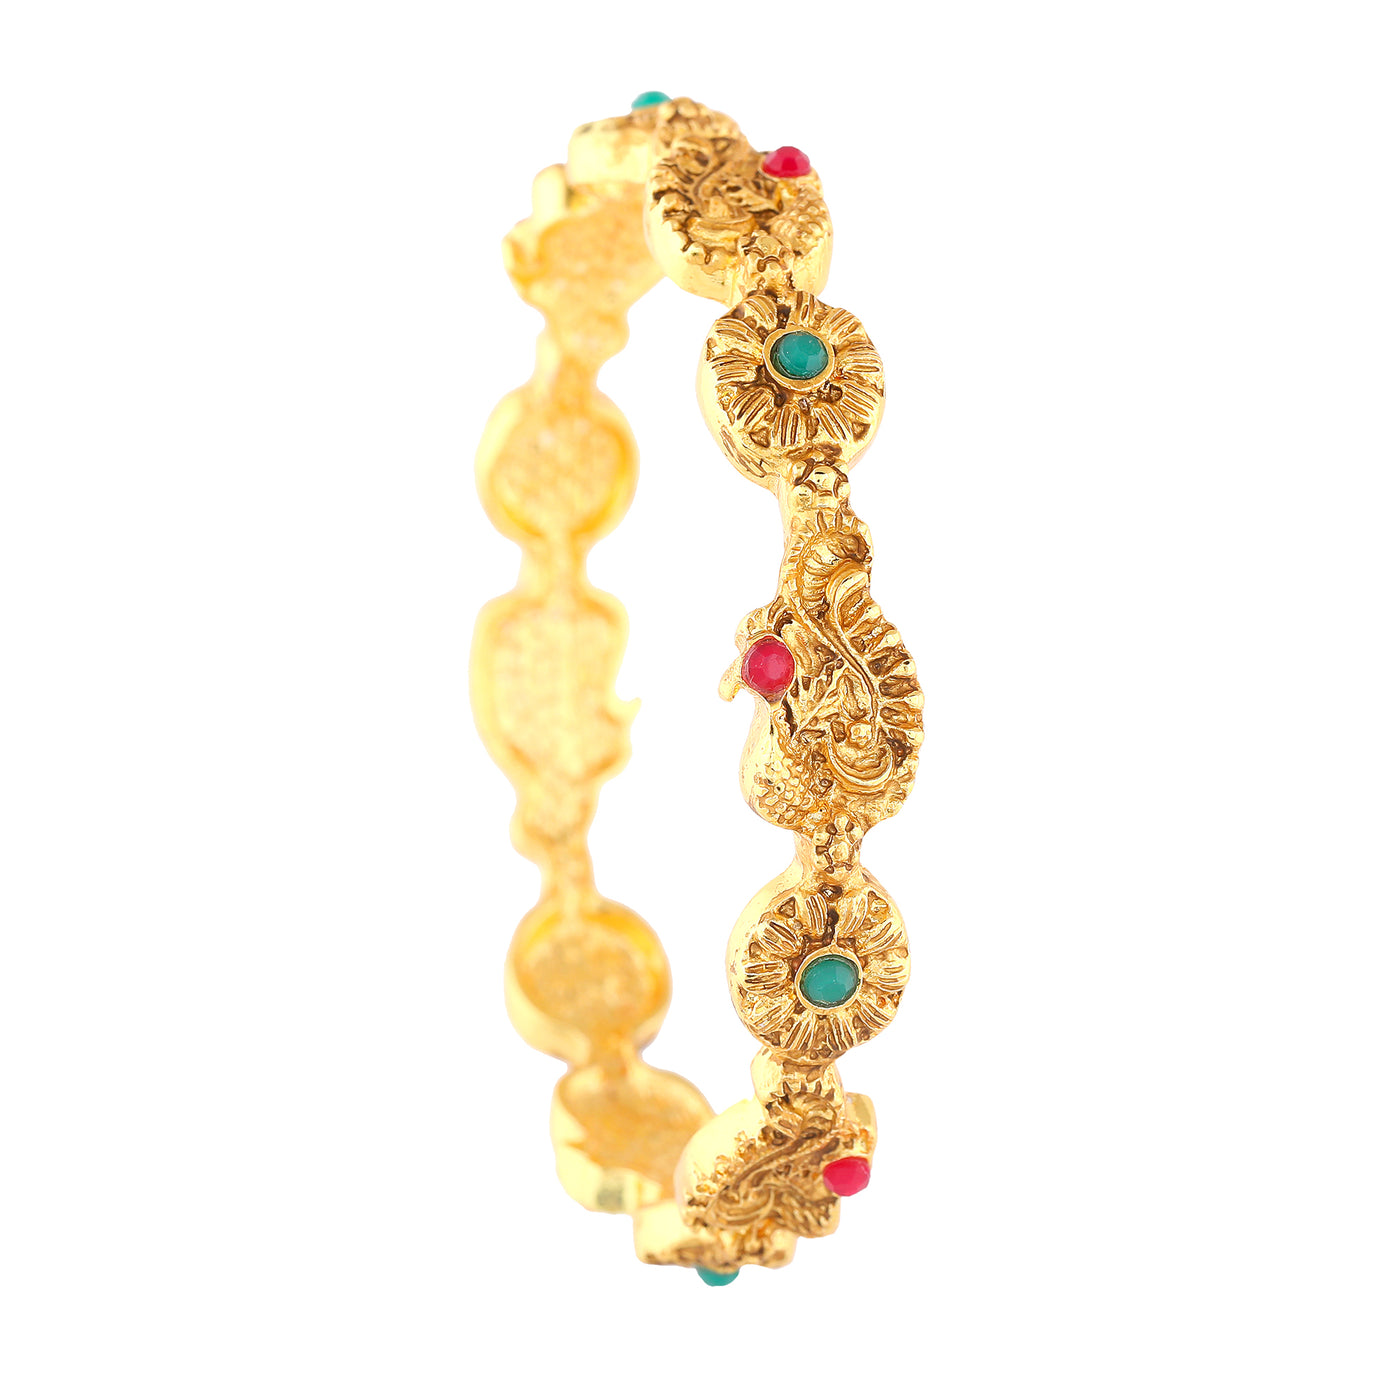 Estele Gold Plated Ravishing Peacock & Flower Designer Bangle with Crystals for Women